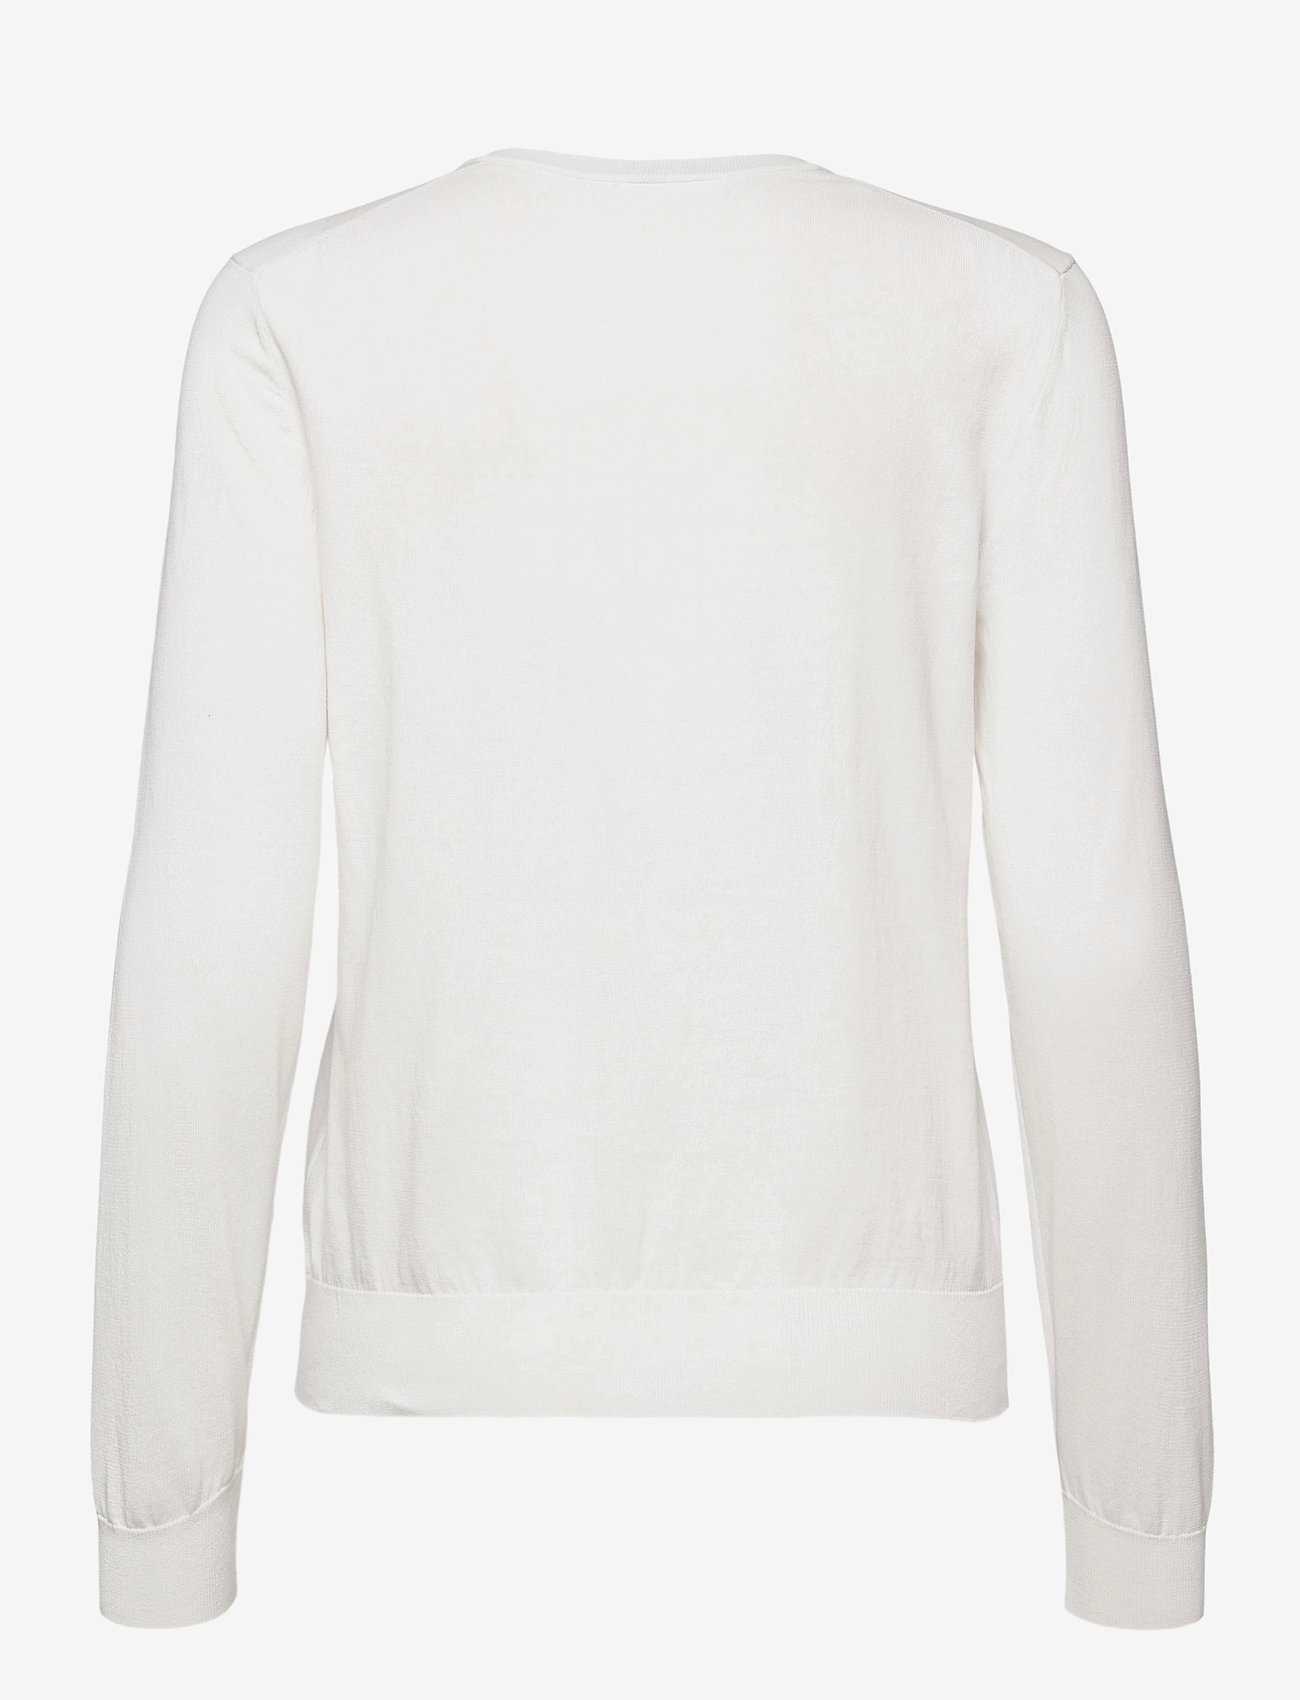 lacoste white jumper